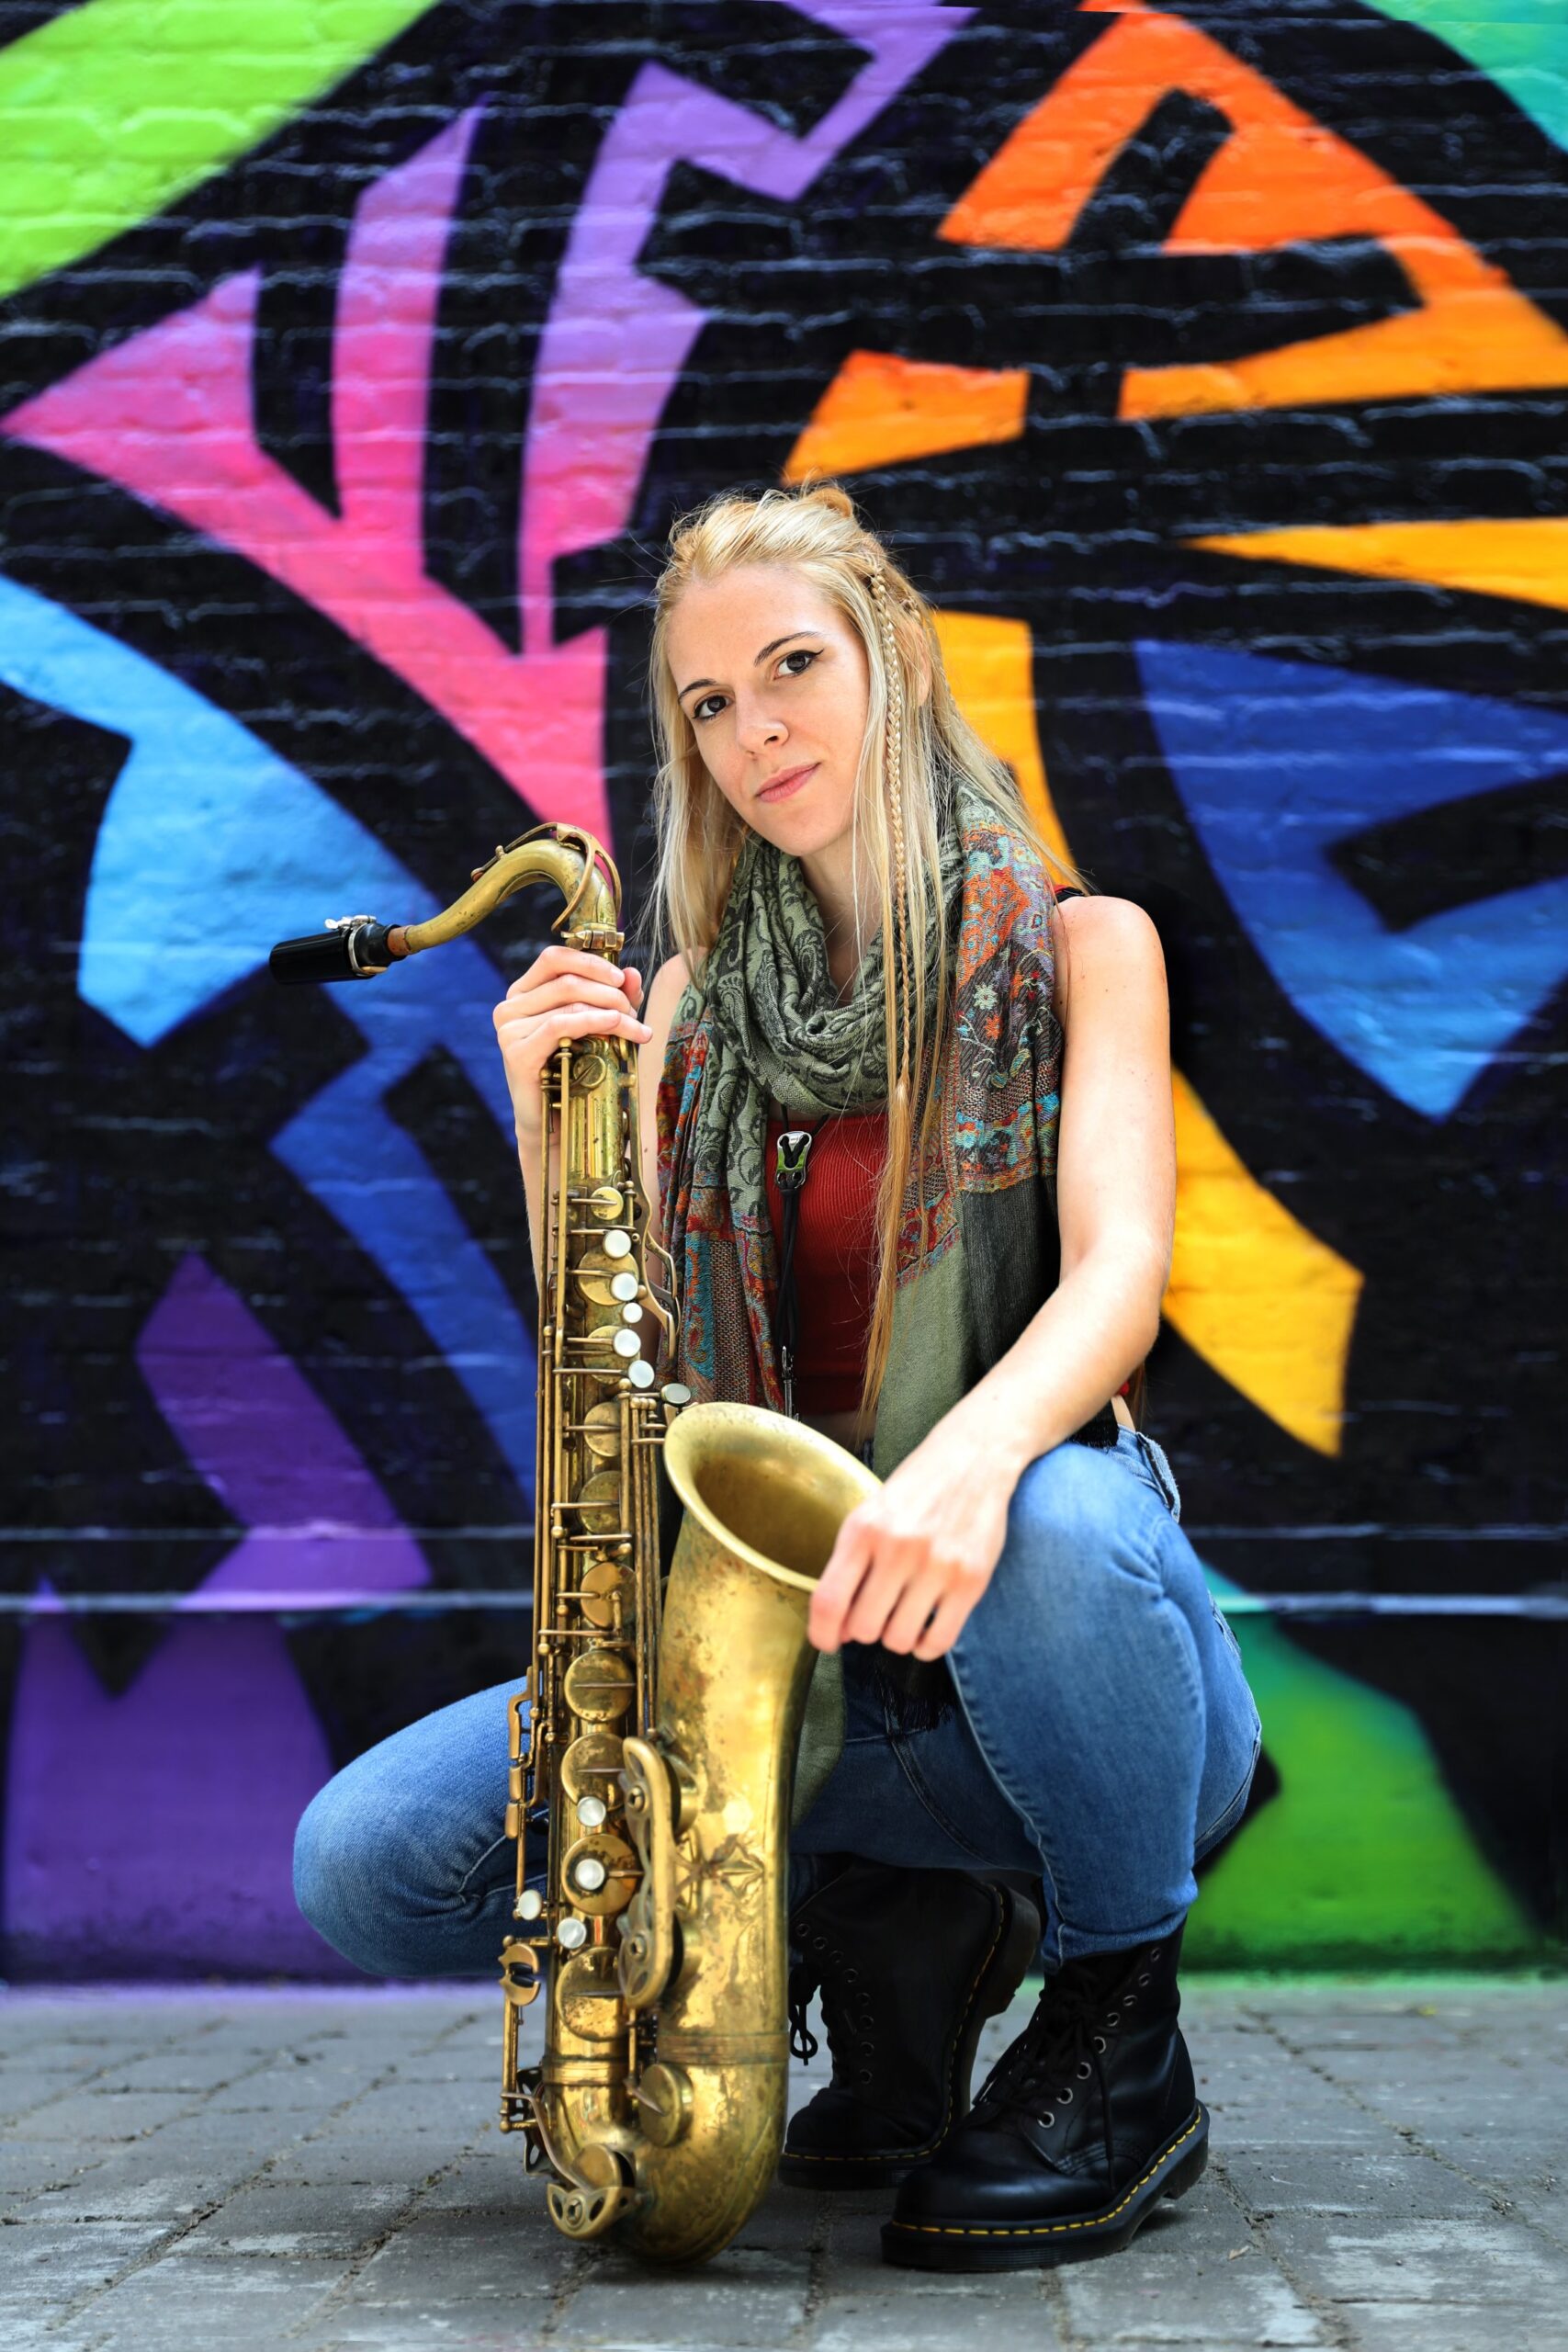 Julieta Eugenio with her saxophone